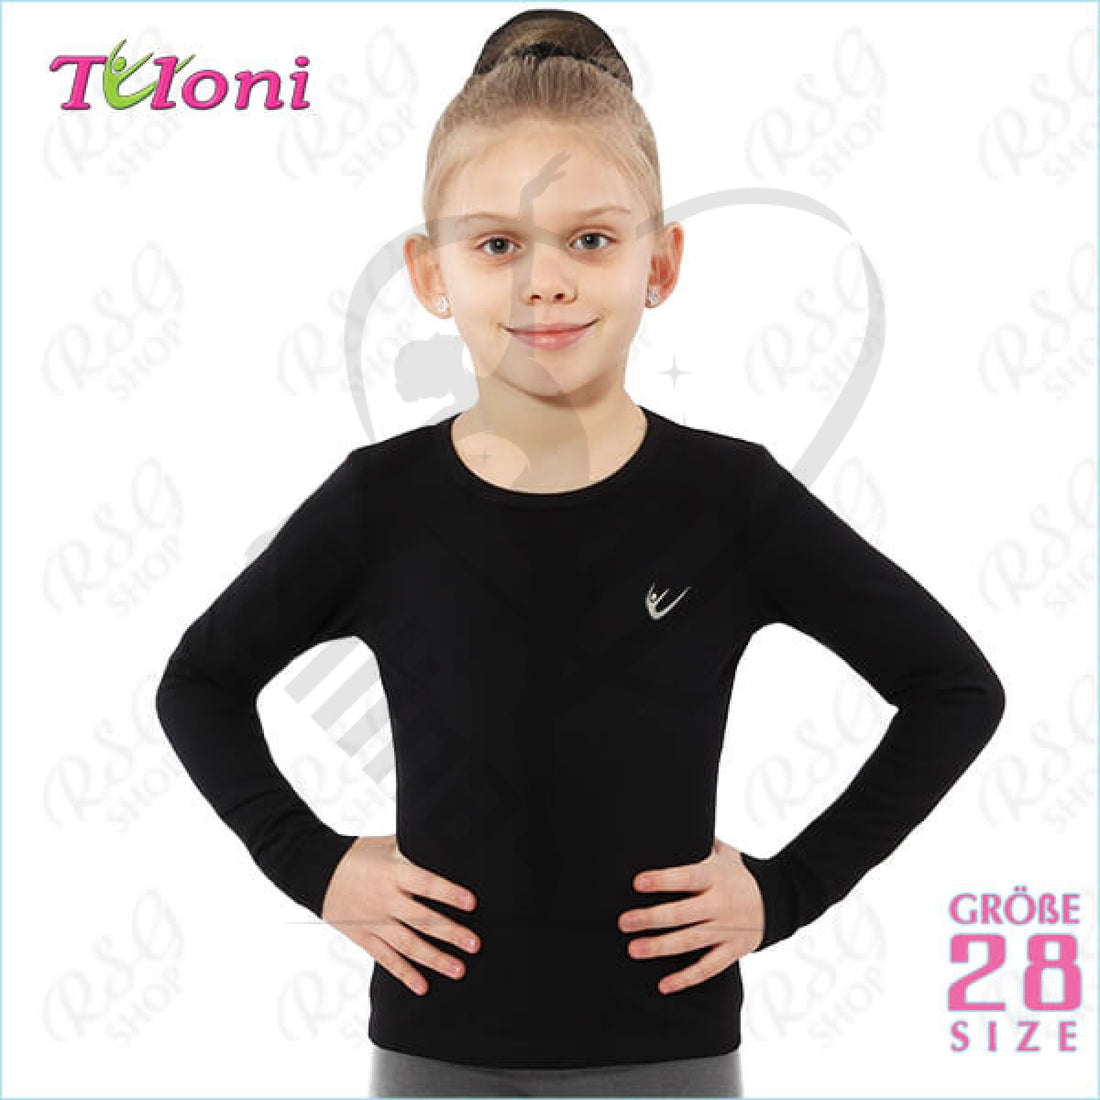 Tuloni Long Sleeve Top 28 (104-110) T Shirts & Tops